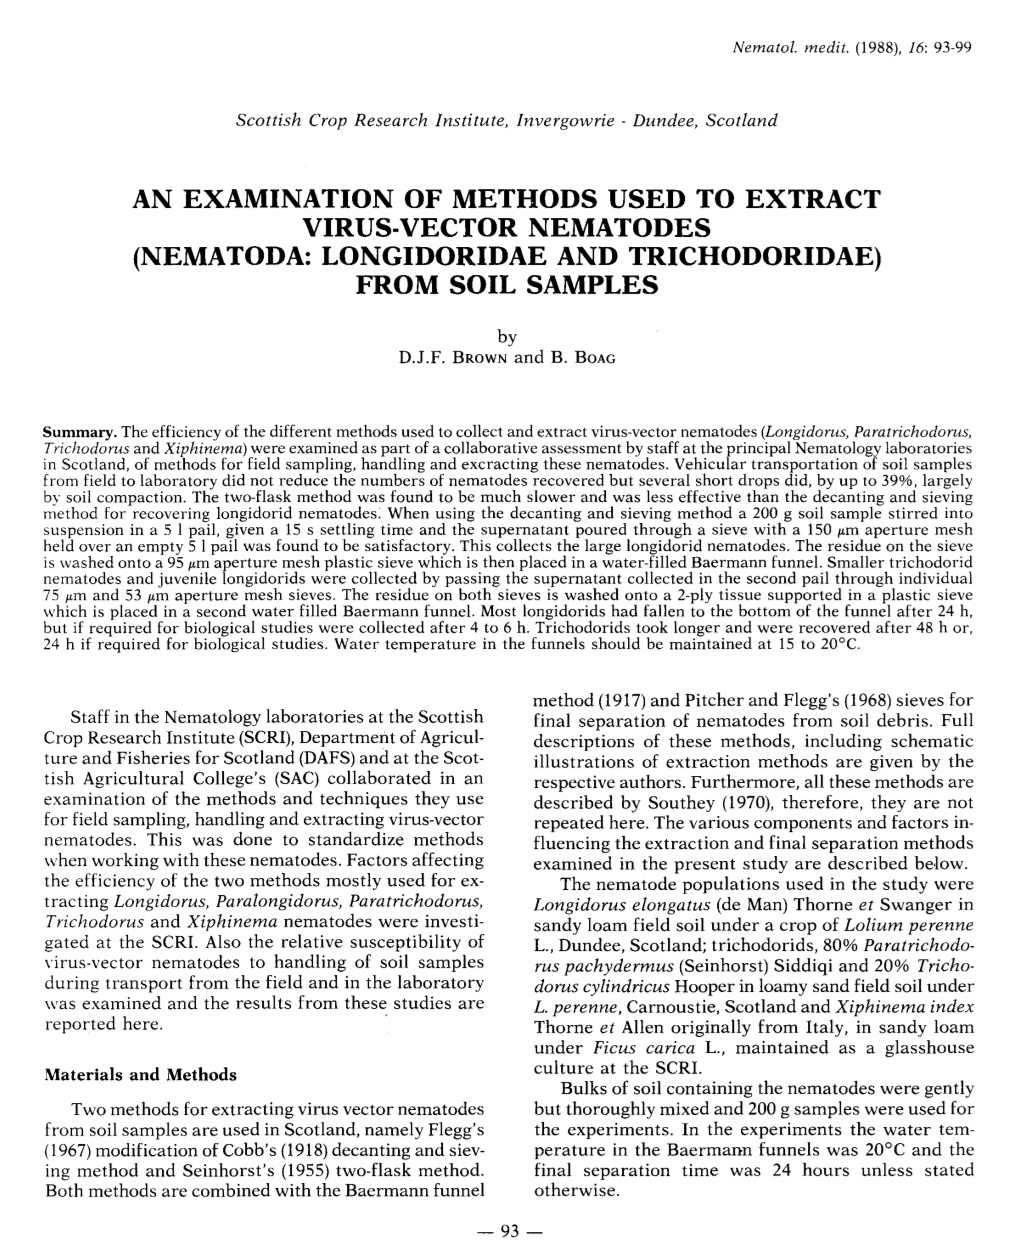 An Examination of Methods Used to Extract Virus-Vector Nematodes (Nematoda: Longidoridae and Trichodoridae) from Soil Samples